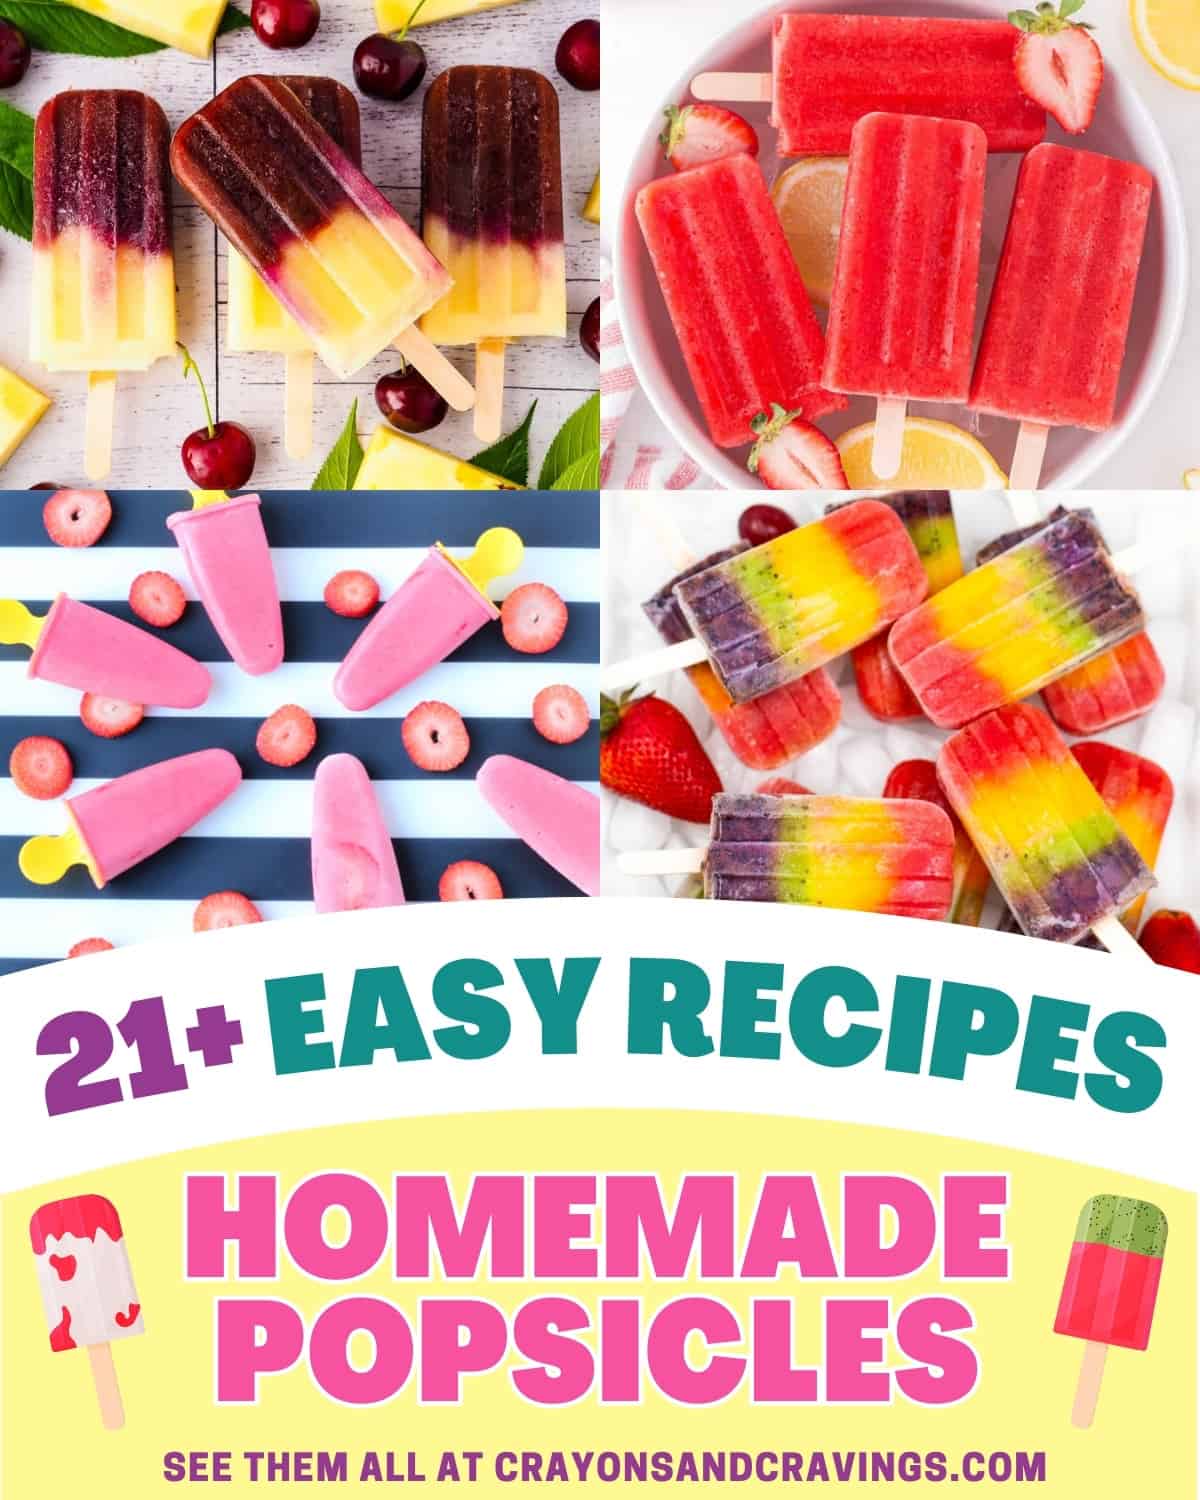 Homemade Popsicles: 21+ Easy Recipes.